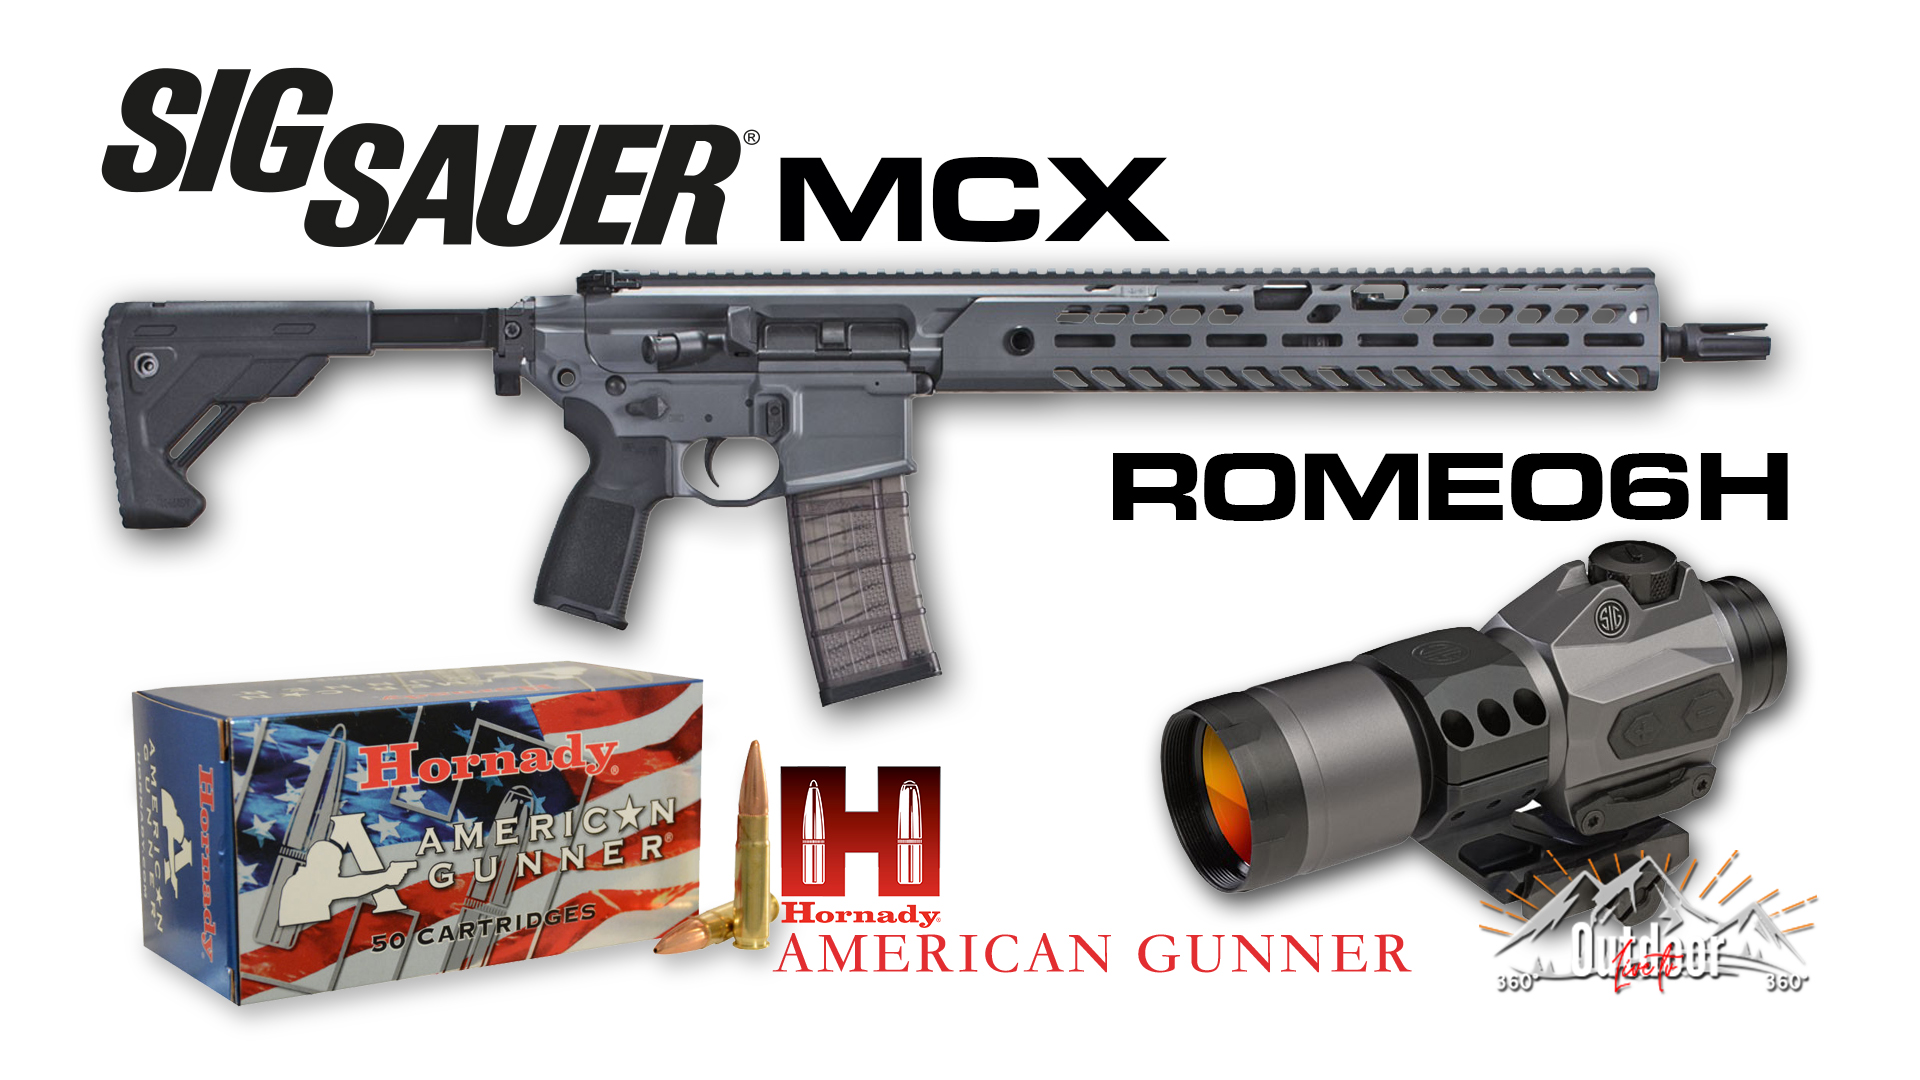 Sig Sauer MCX – Sig Sauer Romeo 6H – Hornady American Gunner